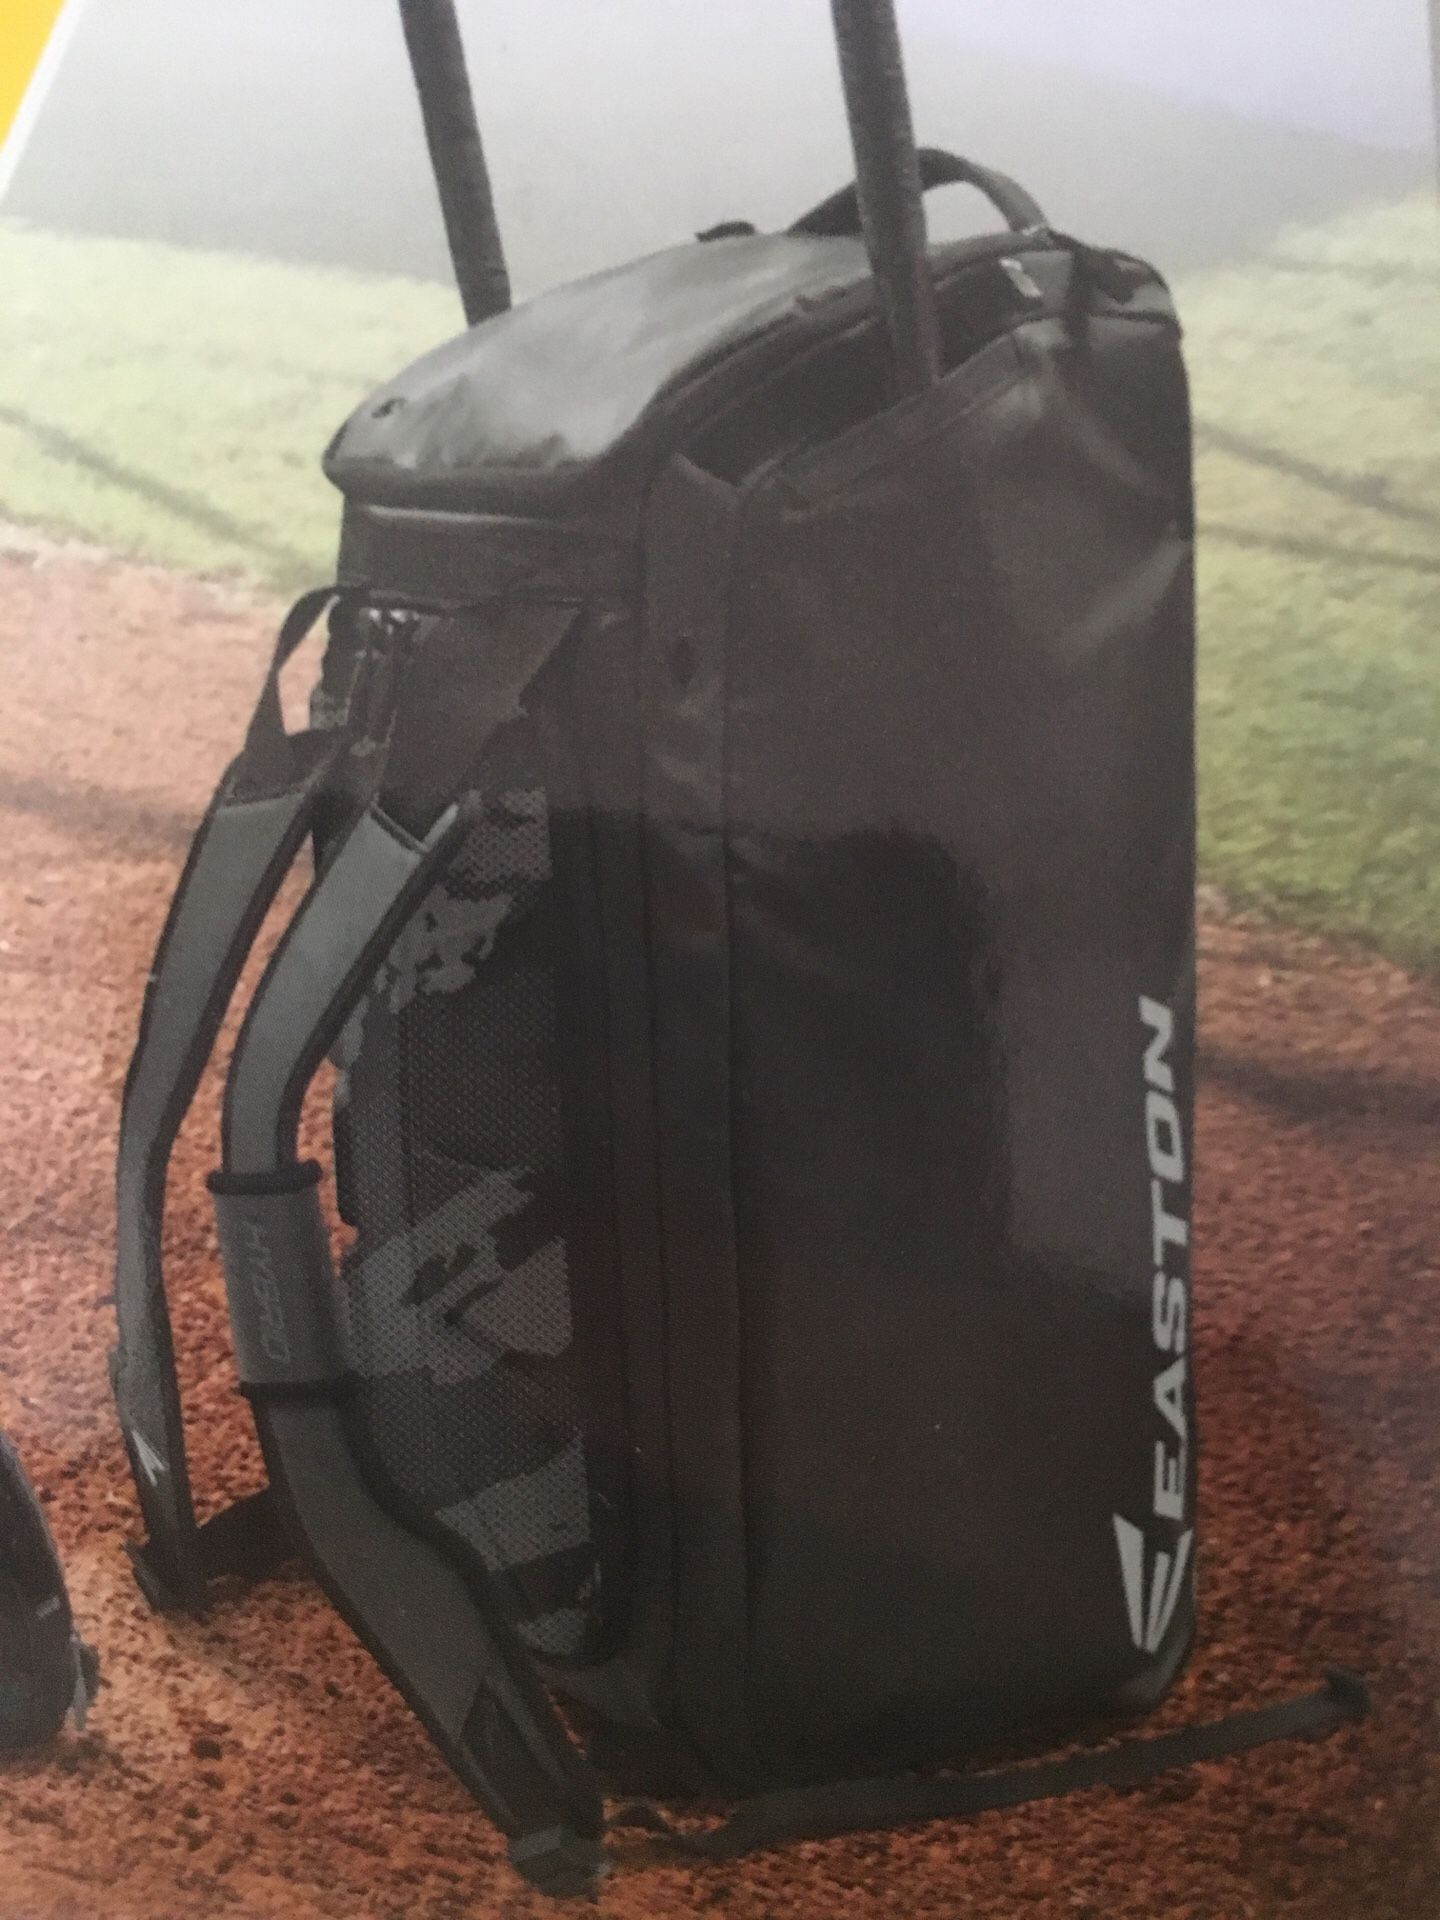 Easton hybrid Bp duffle backpack, made for baseball and wherever it takes